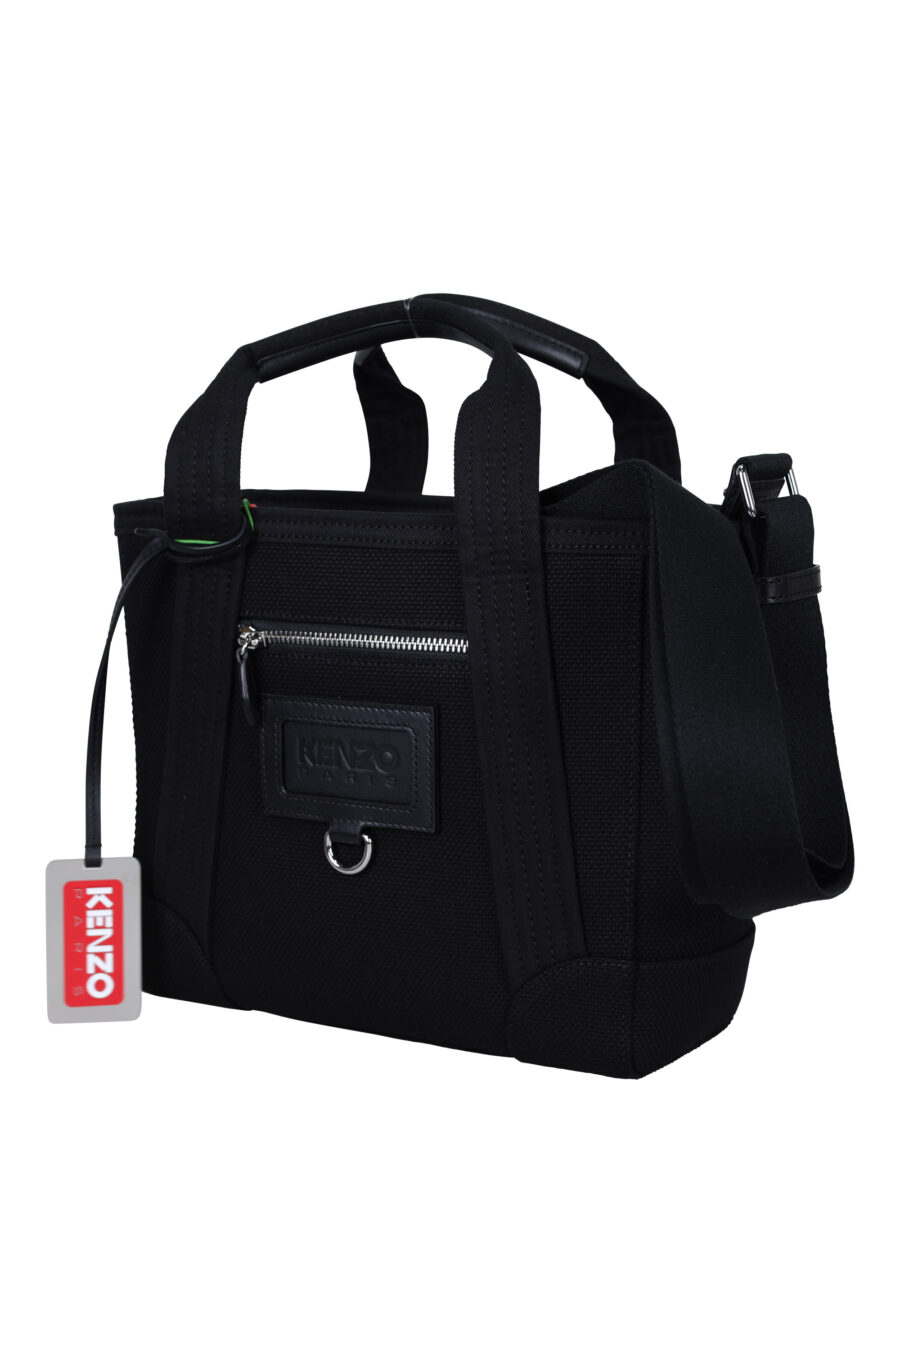 Tote bag mini with mini logo "kenzo paris" - 3612230546851 1